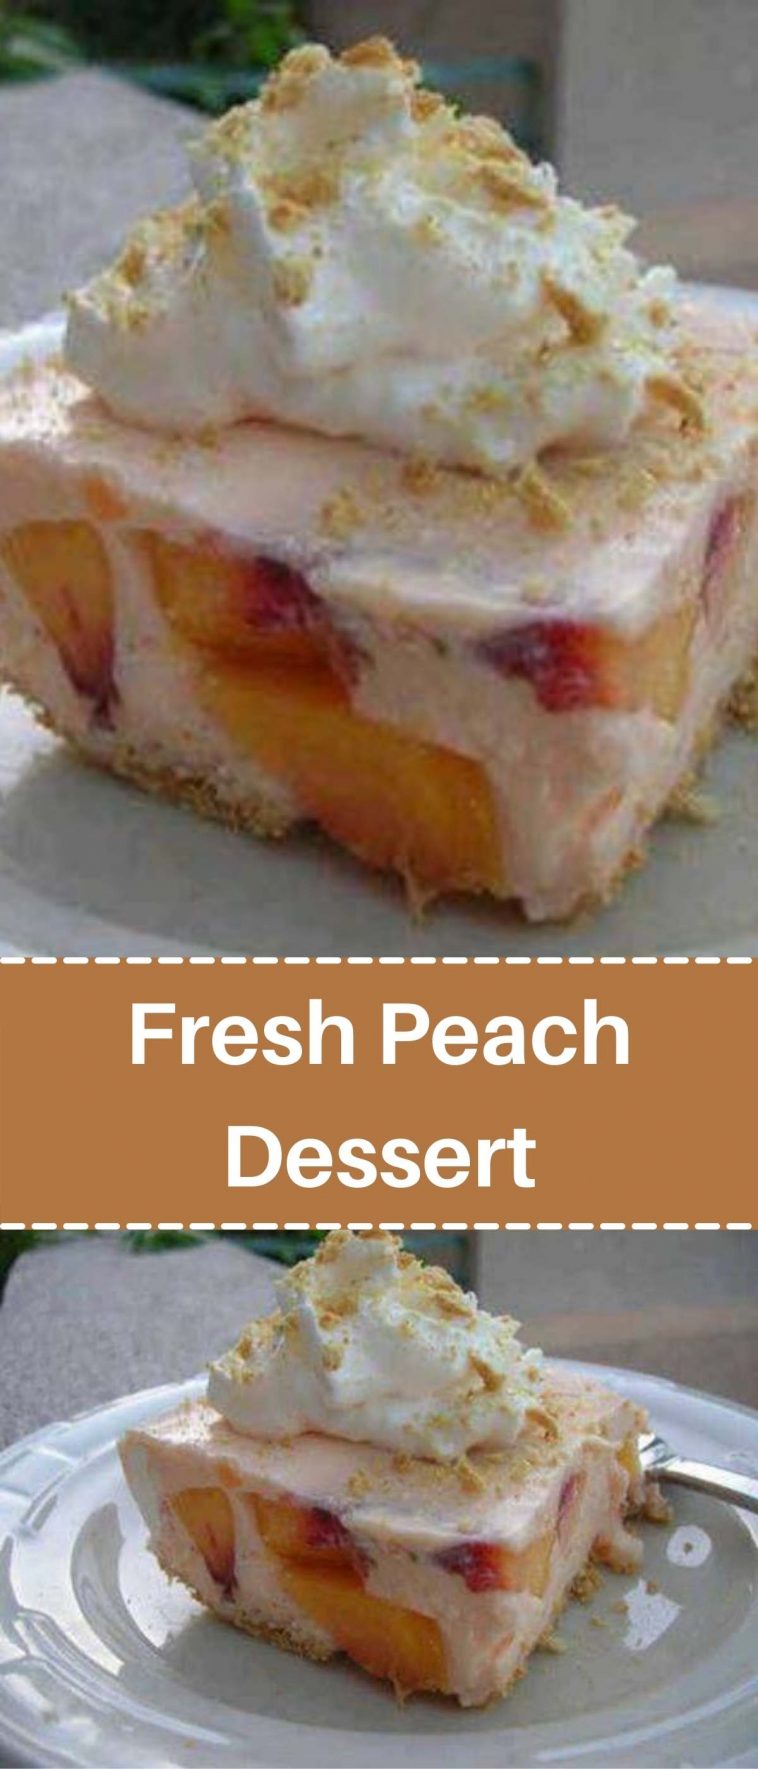 Fresh Peach Dessert